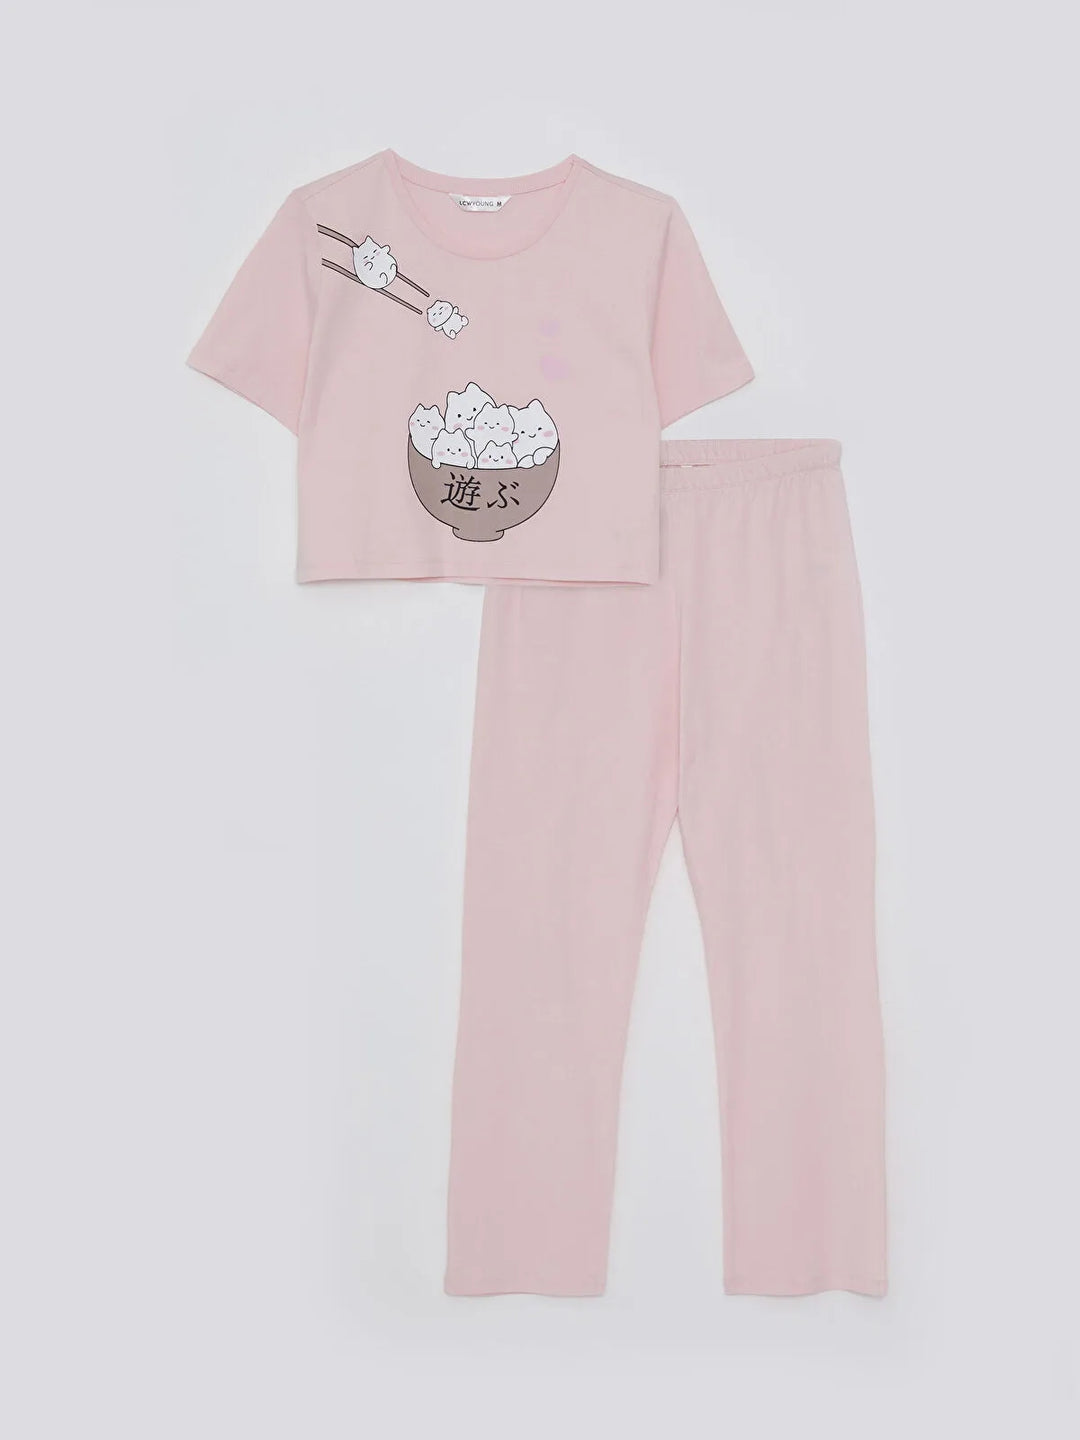 Lcw Dream Crew Neck Printed Short Sleeve Cotton Women Pajamas Set